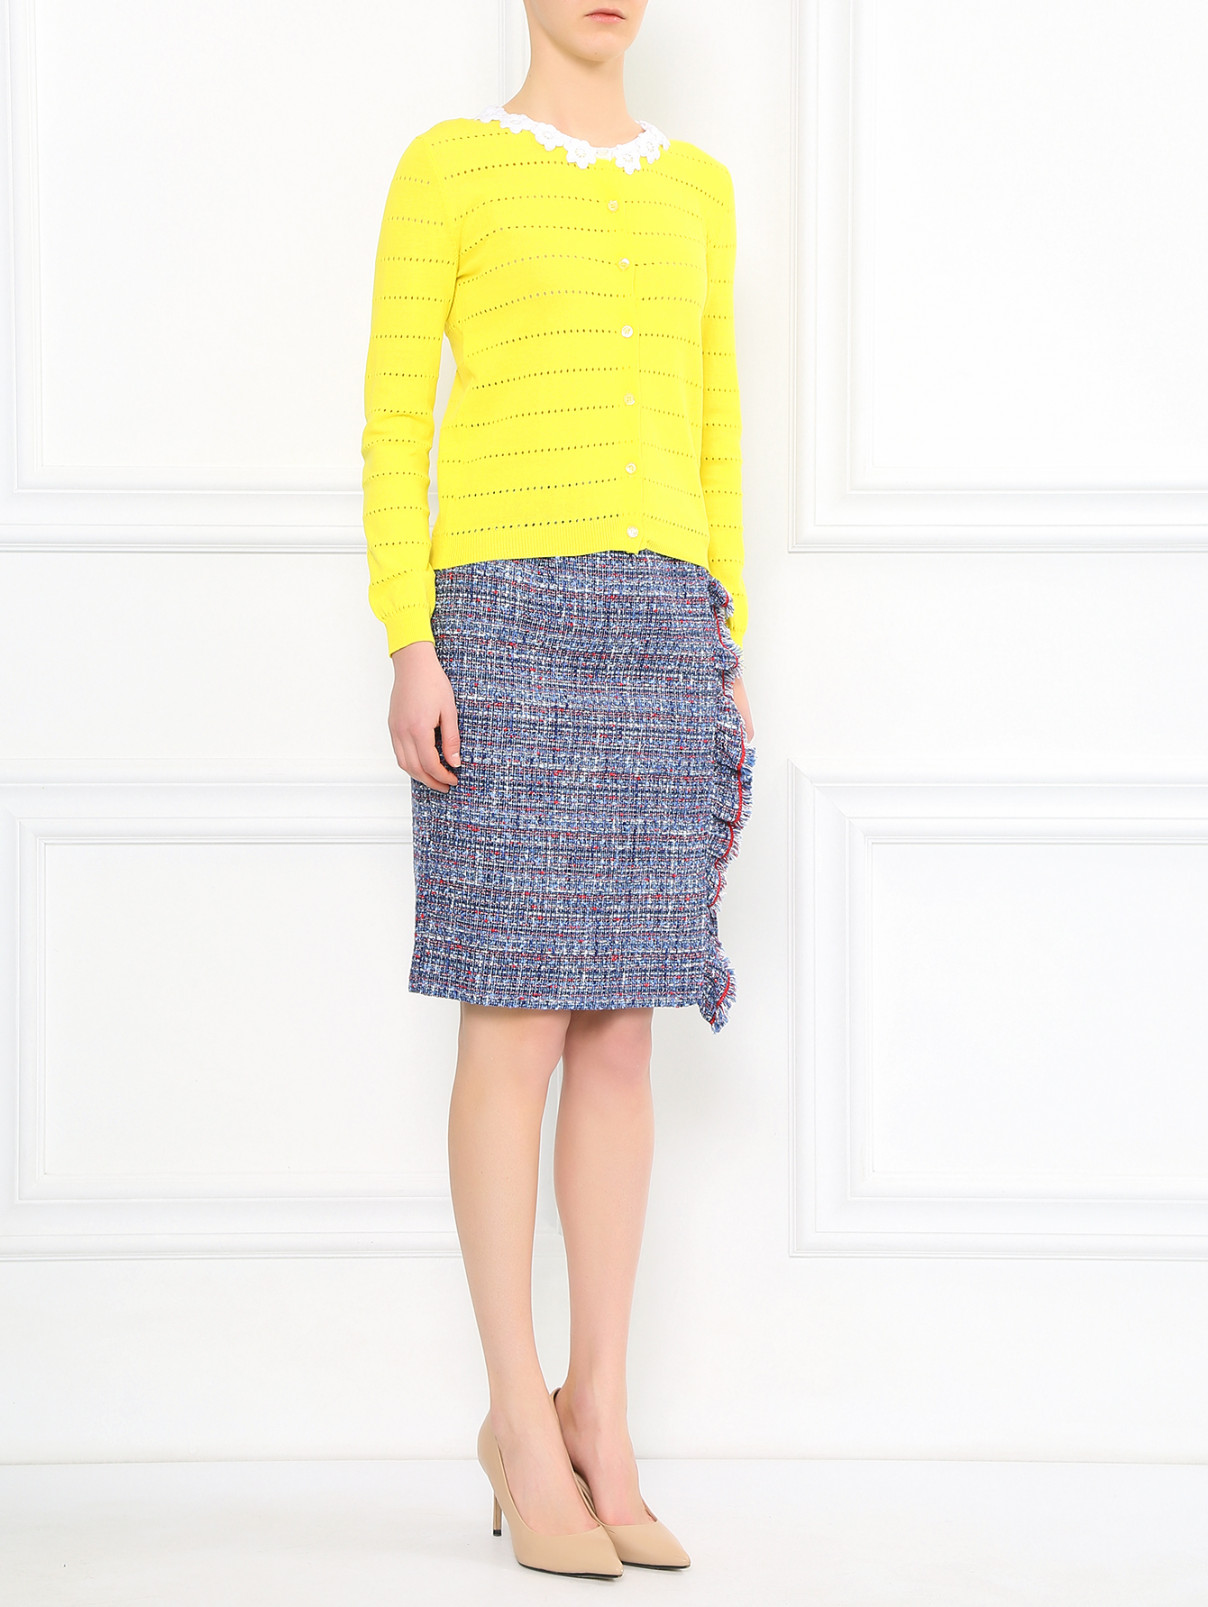 Кардиган из хлопка с вышивкой Moschino Boutique  –  Модель Общий вид  – Цвет:  Желтый